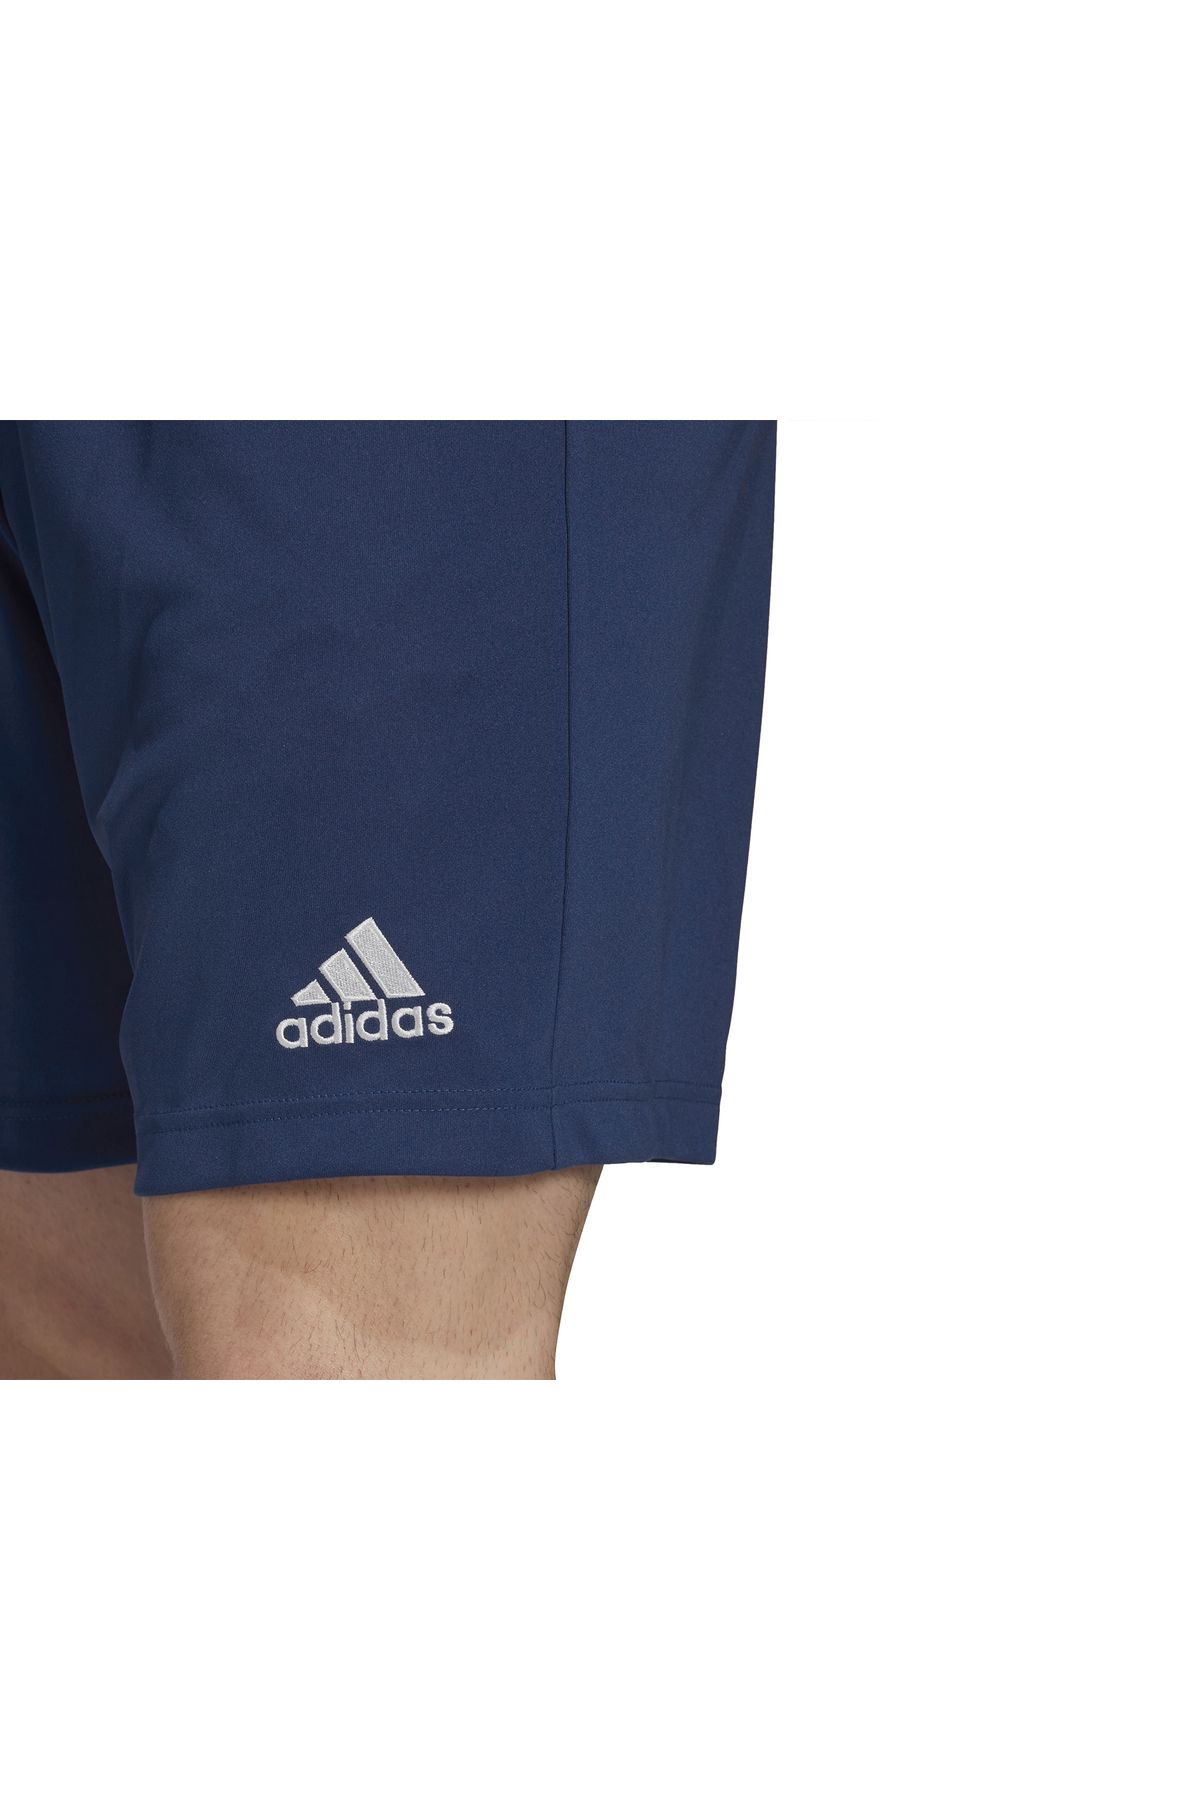 adidas Ent22 Sho Men\'s Shorts H57506 Navy Blue - Trendyol